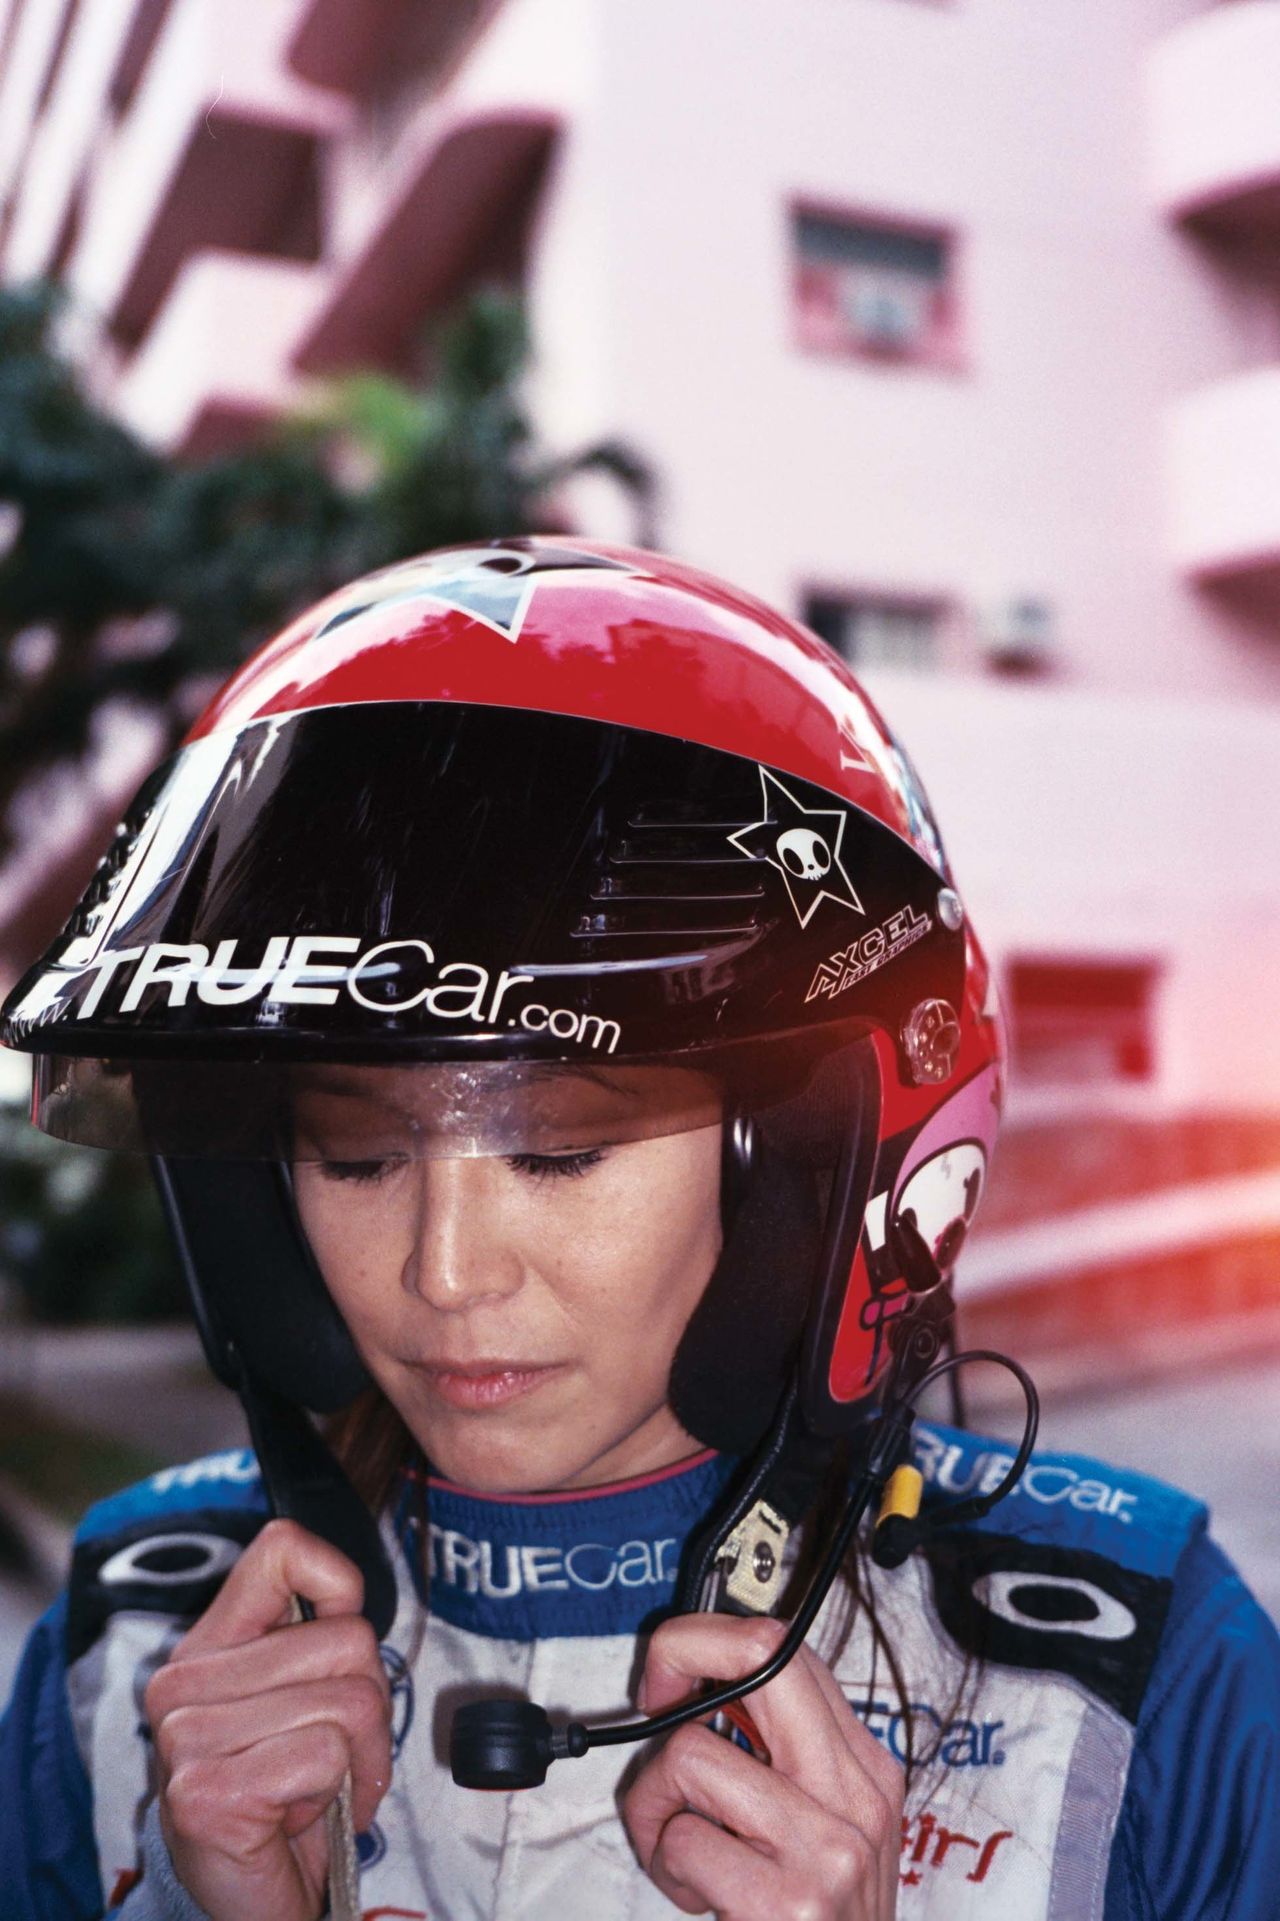 Verena Mai, a racecar driver from Hawaii. 